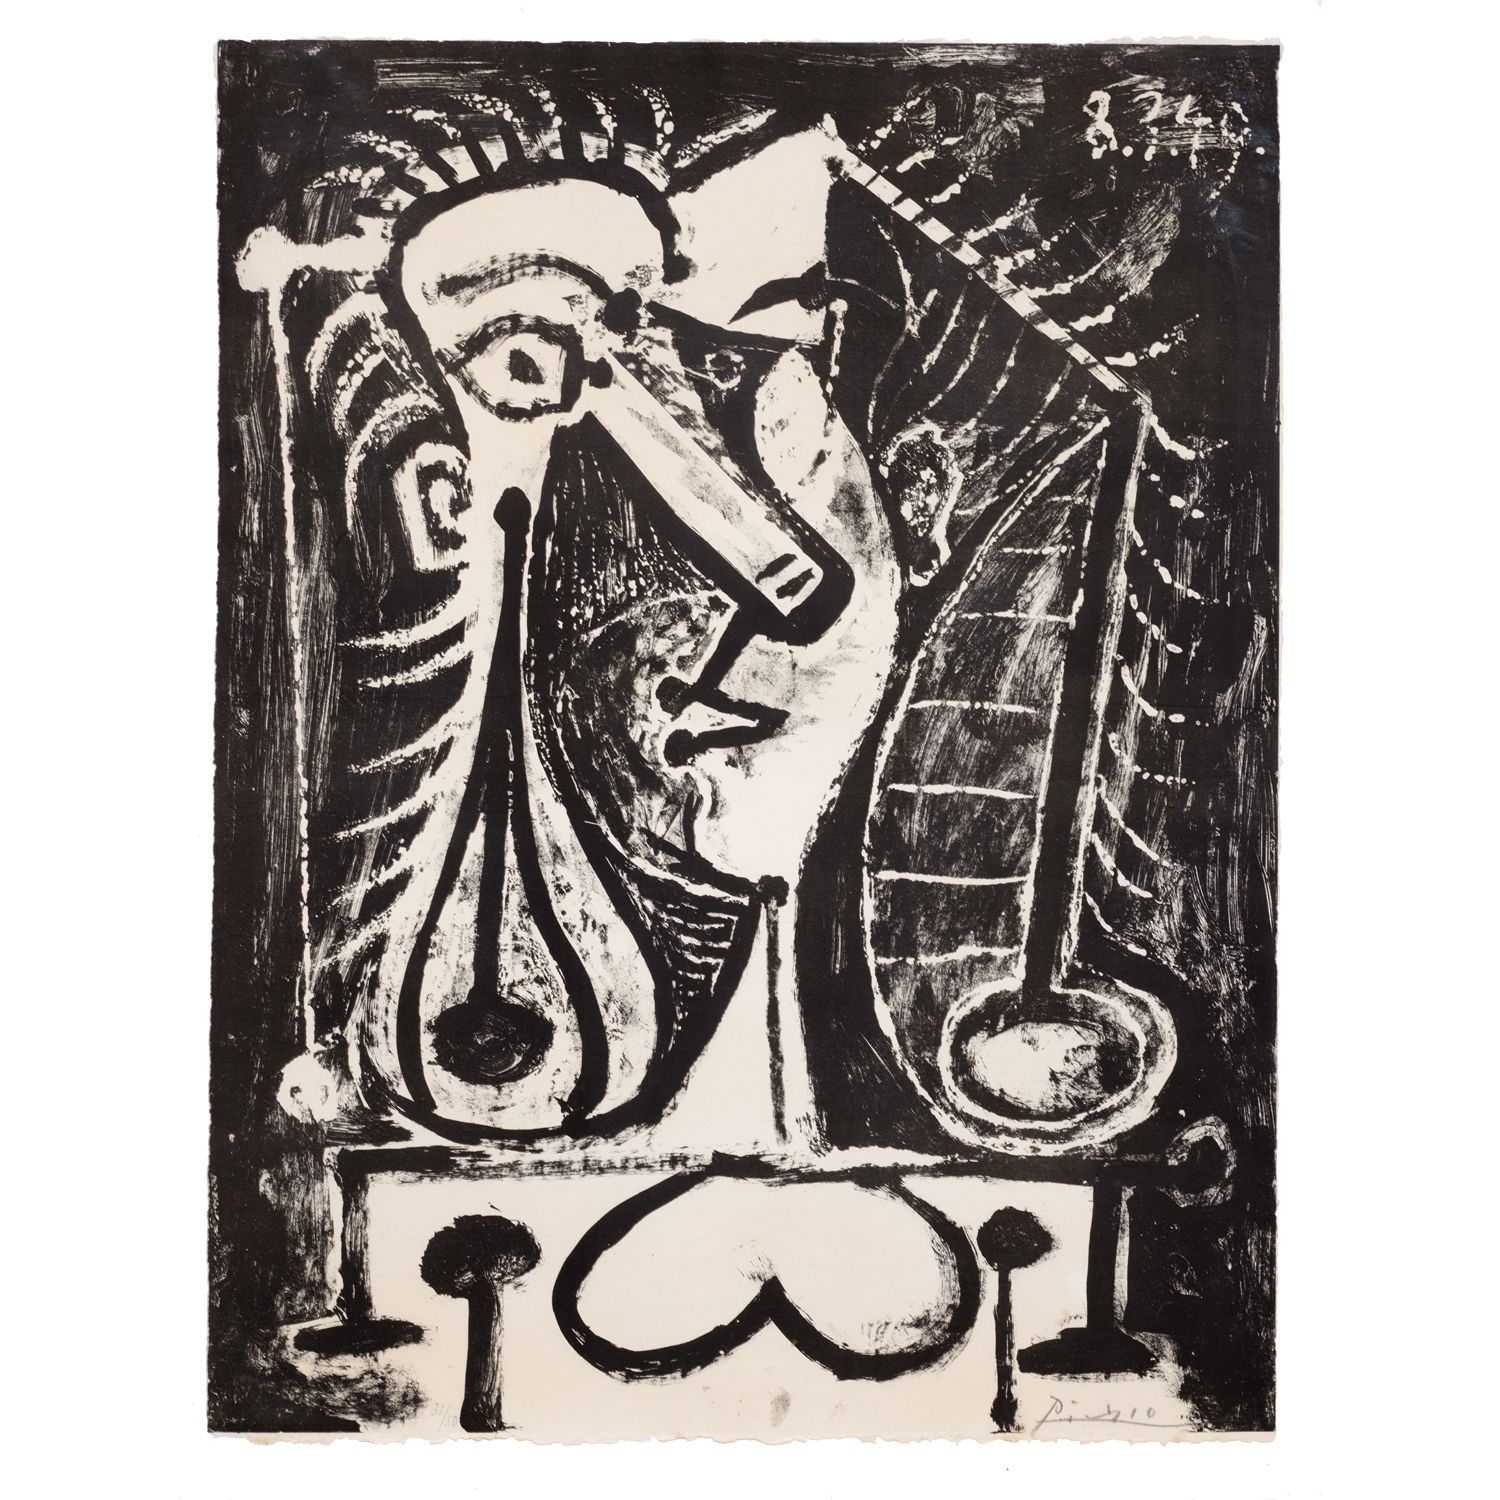 Pablo Picasso (1881-1973) Figure composée I - 1949 巴勃罗-毕加索 (1881-1973)
复合物图I - 1&hellip;